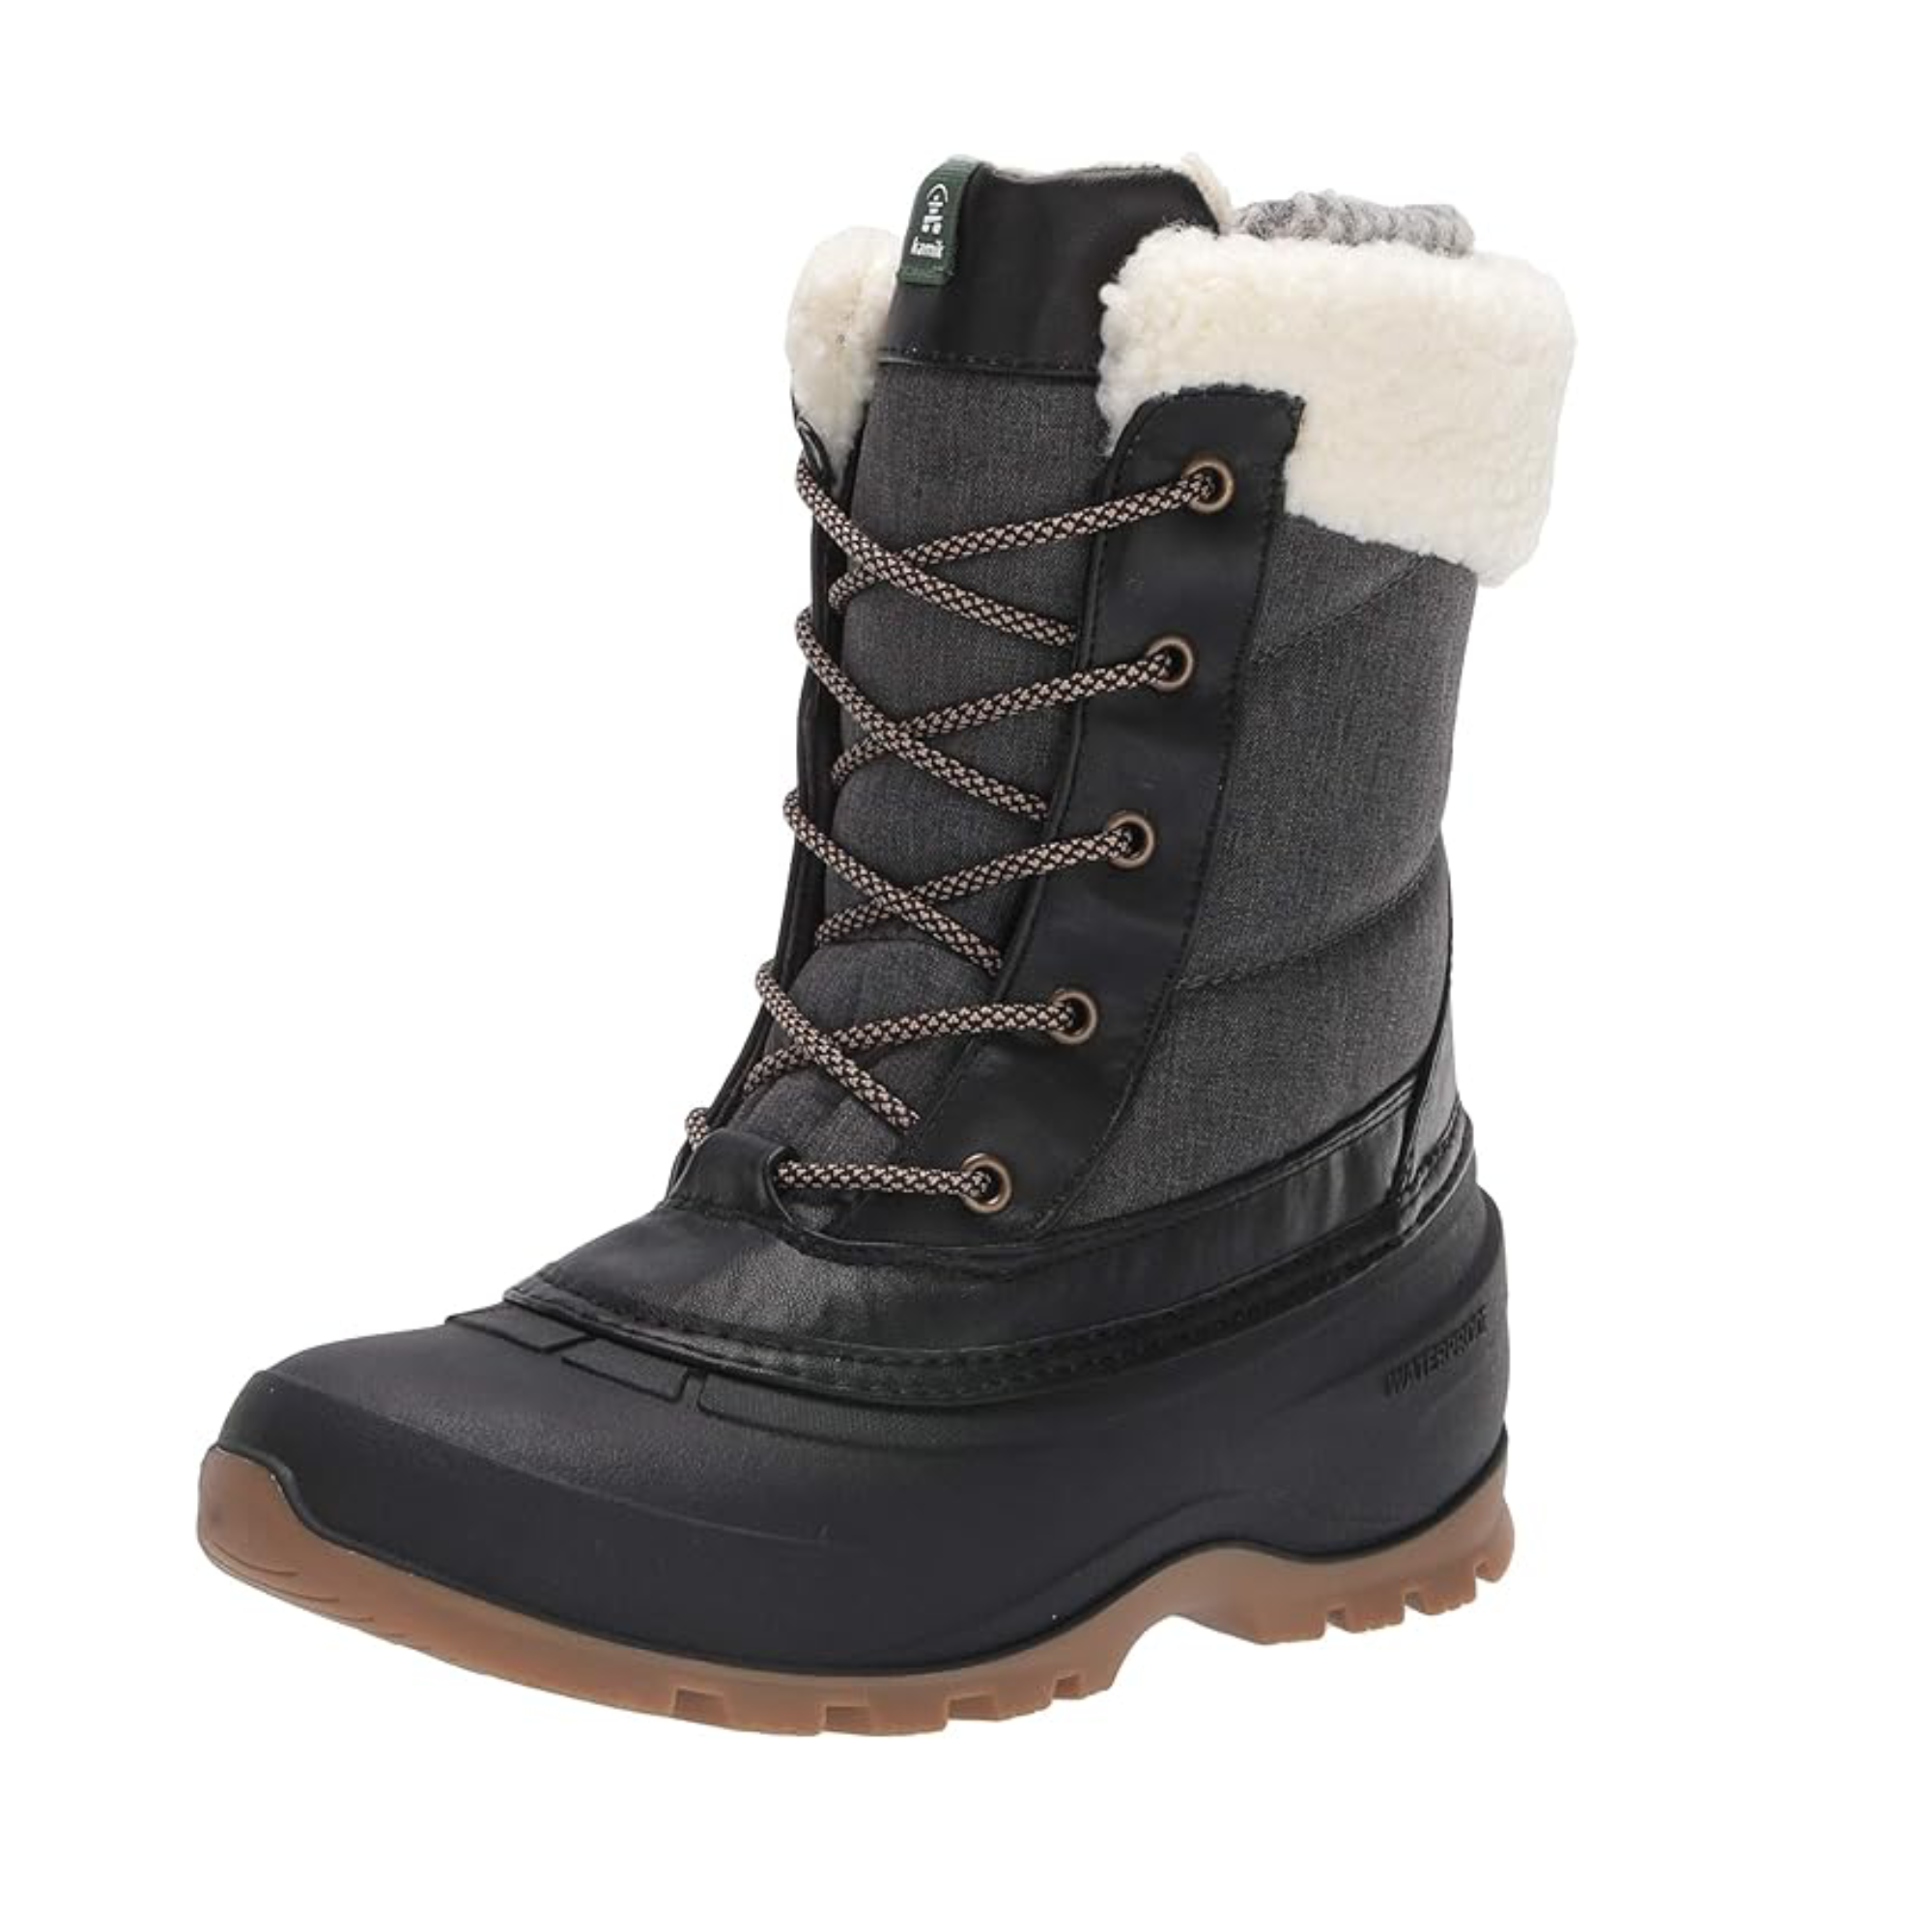 Kamik Women's Snowpearl Boots - Black